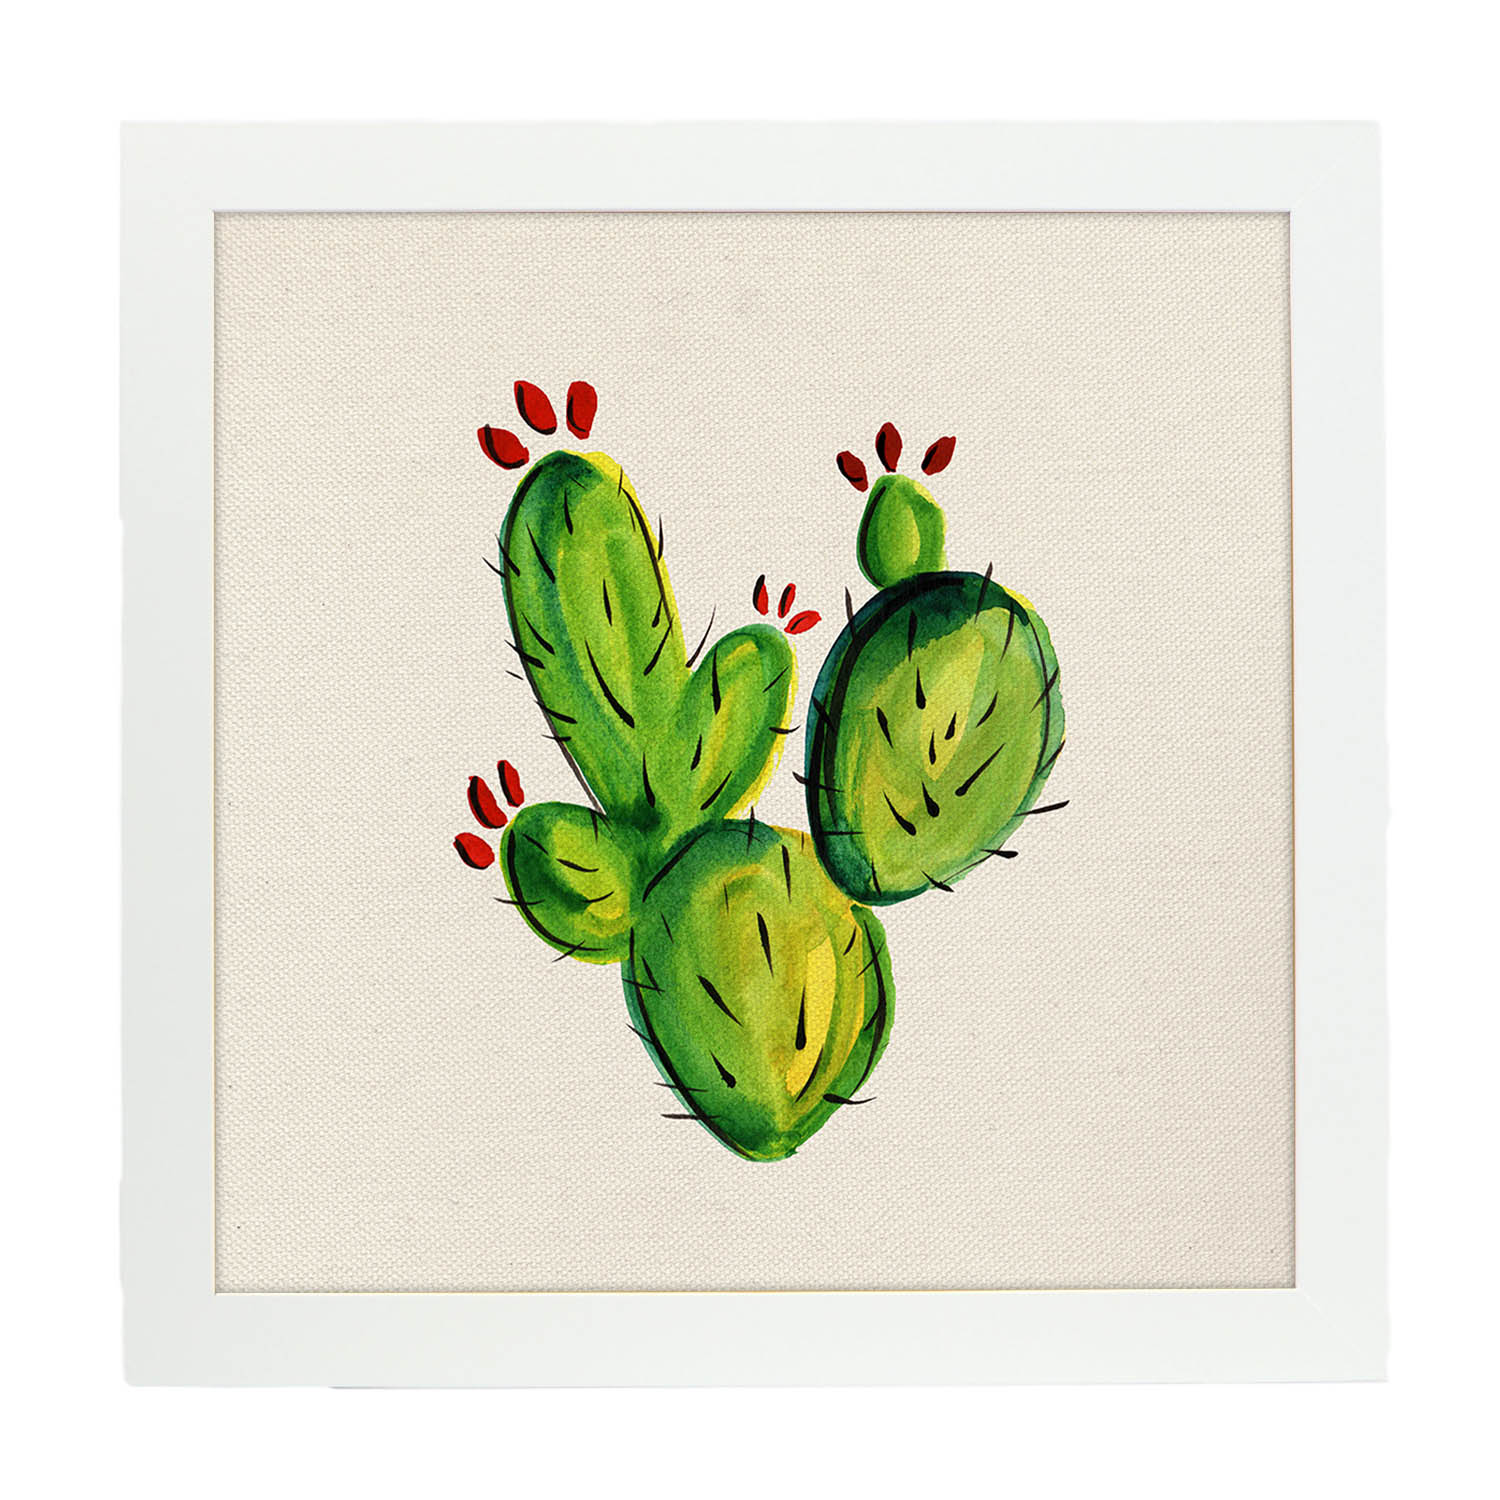 Poster de cactus dibujado. Lámina de Mírame, no me toques-Artwork-Nacnic-25x25 cm-Marco Blanco-Nacnic Estudio SL